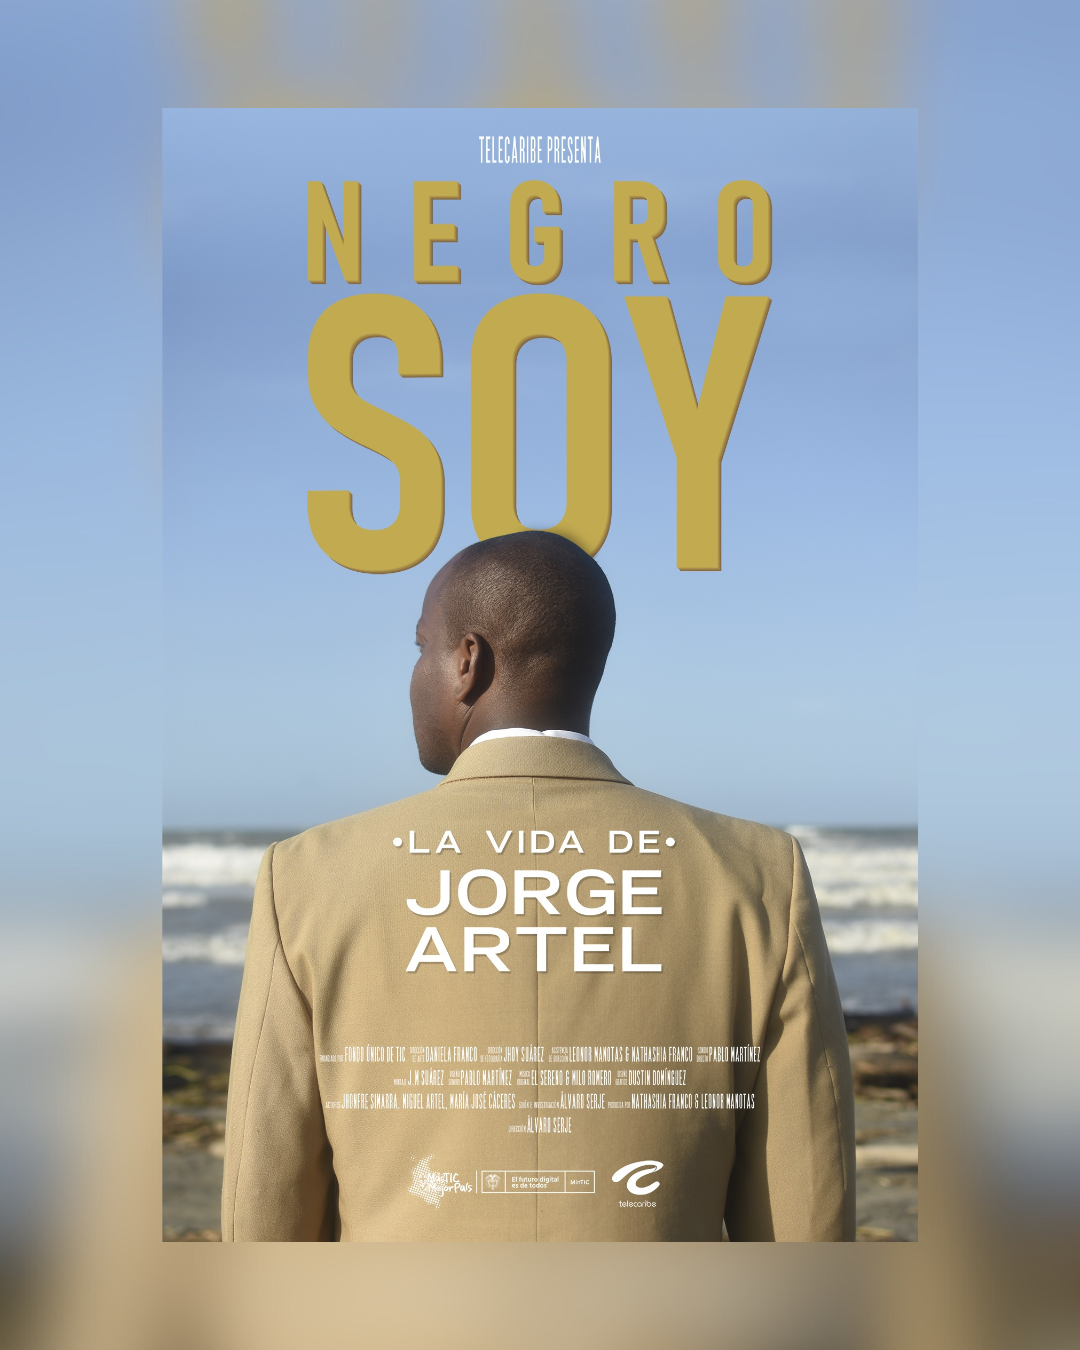 Negro soy: La vida de Jorge Artel